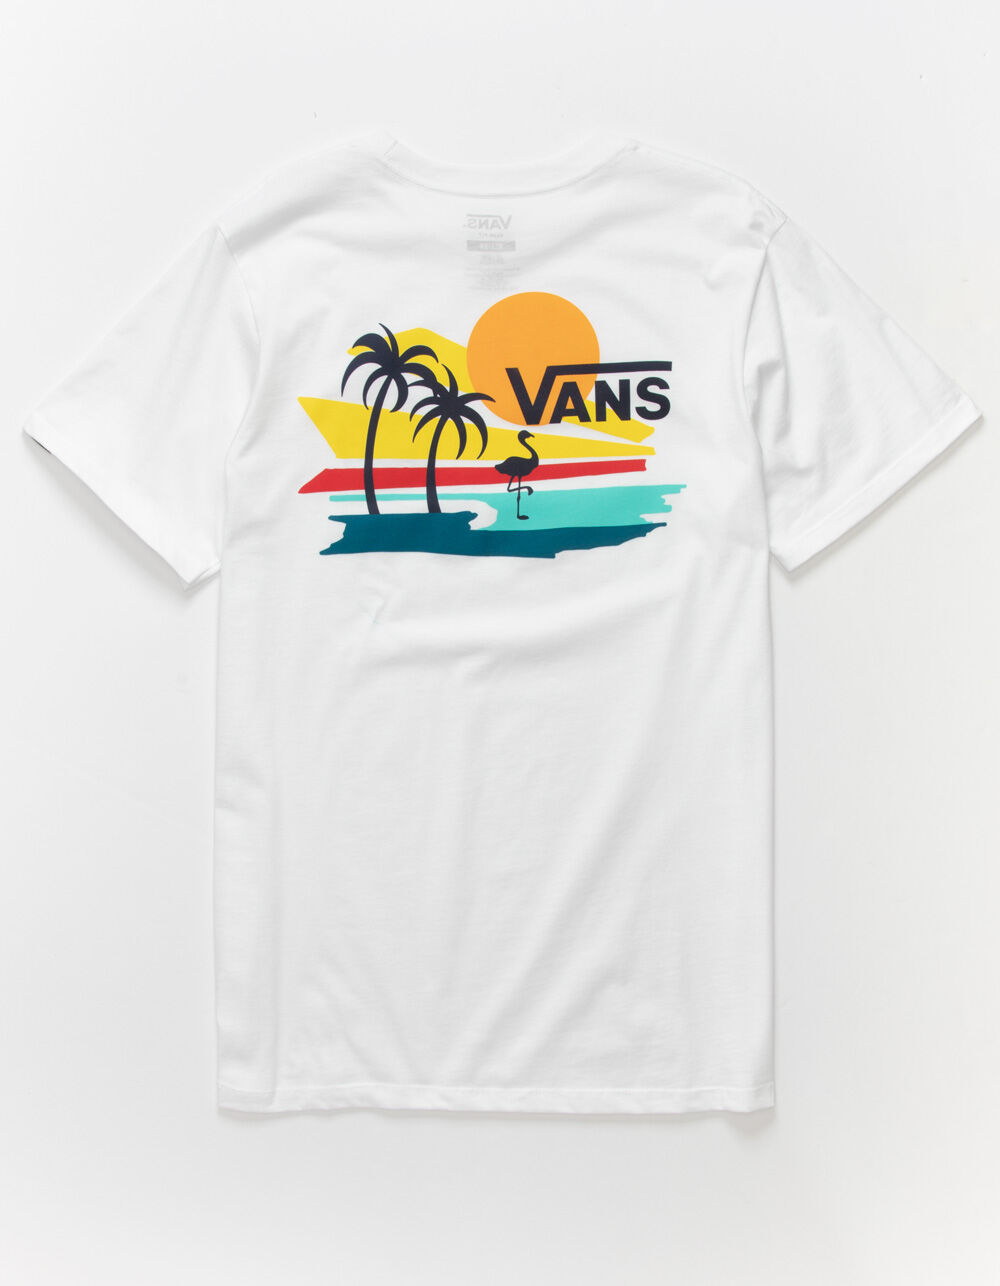 VANSVANS Vintage Beach T-Shirt | DailyMail